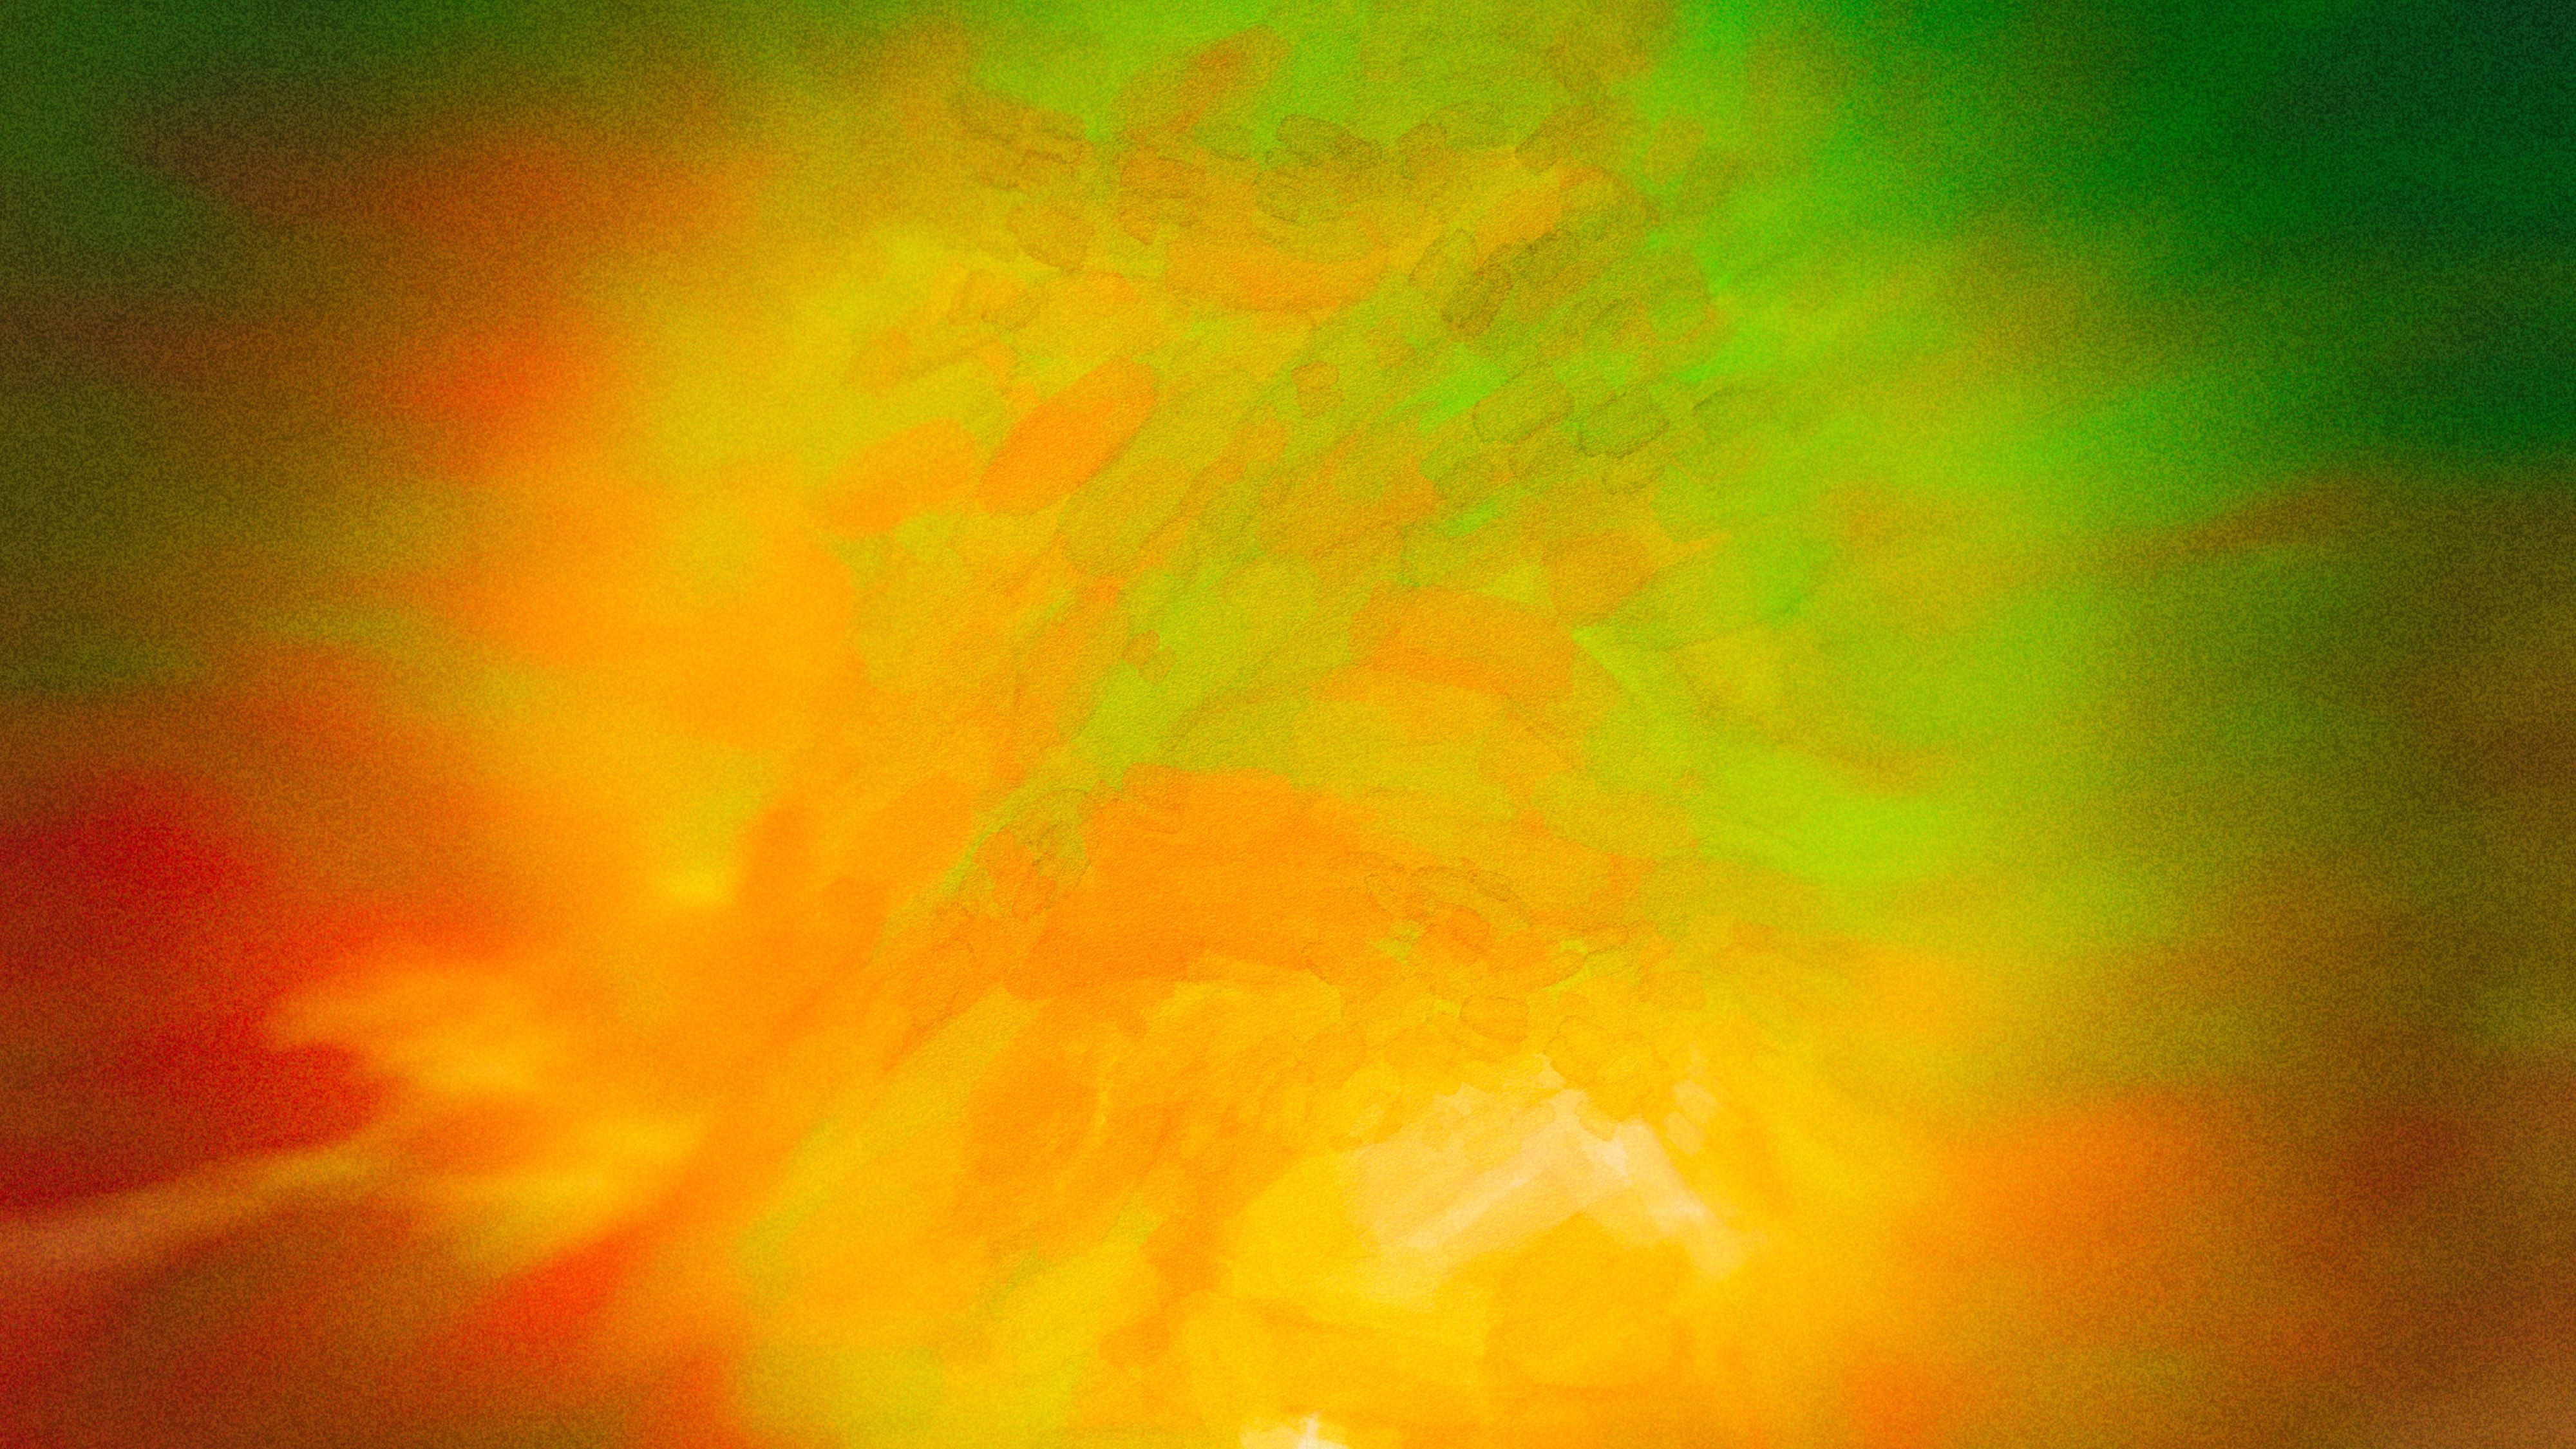 Green Orange Yellow Background Image, #design #graphicdesign #creative #wallpaper #back. Free background image, Red background image, Background image